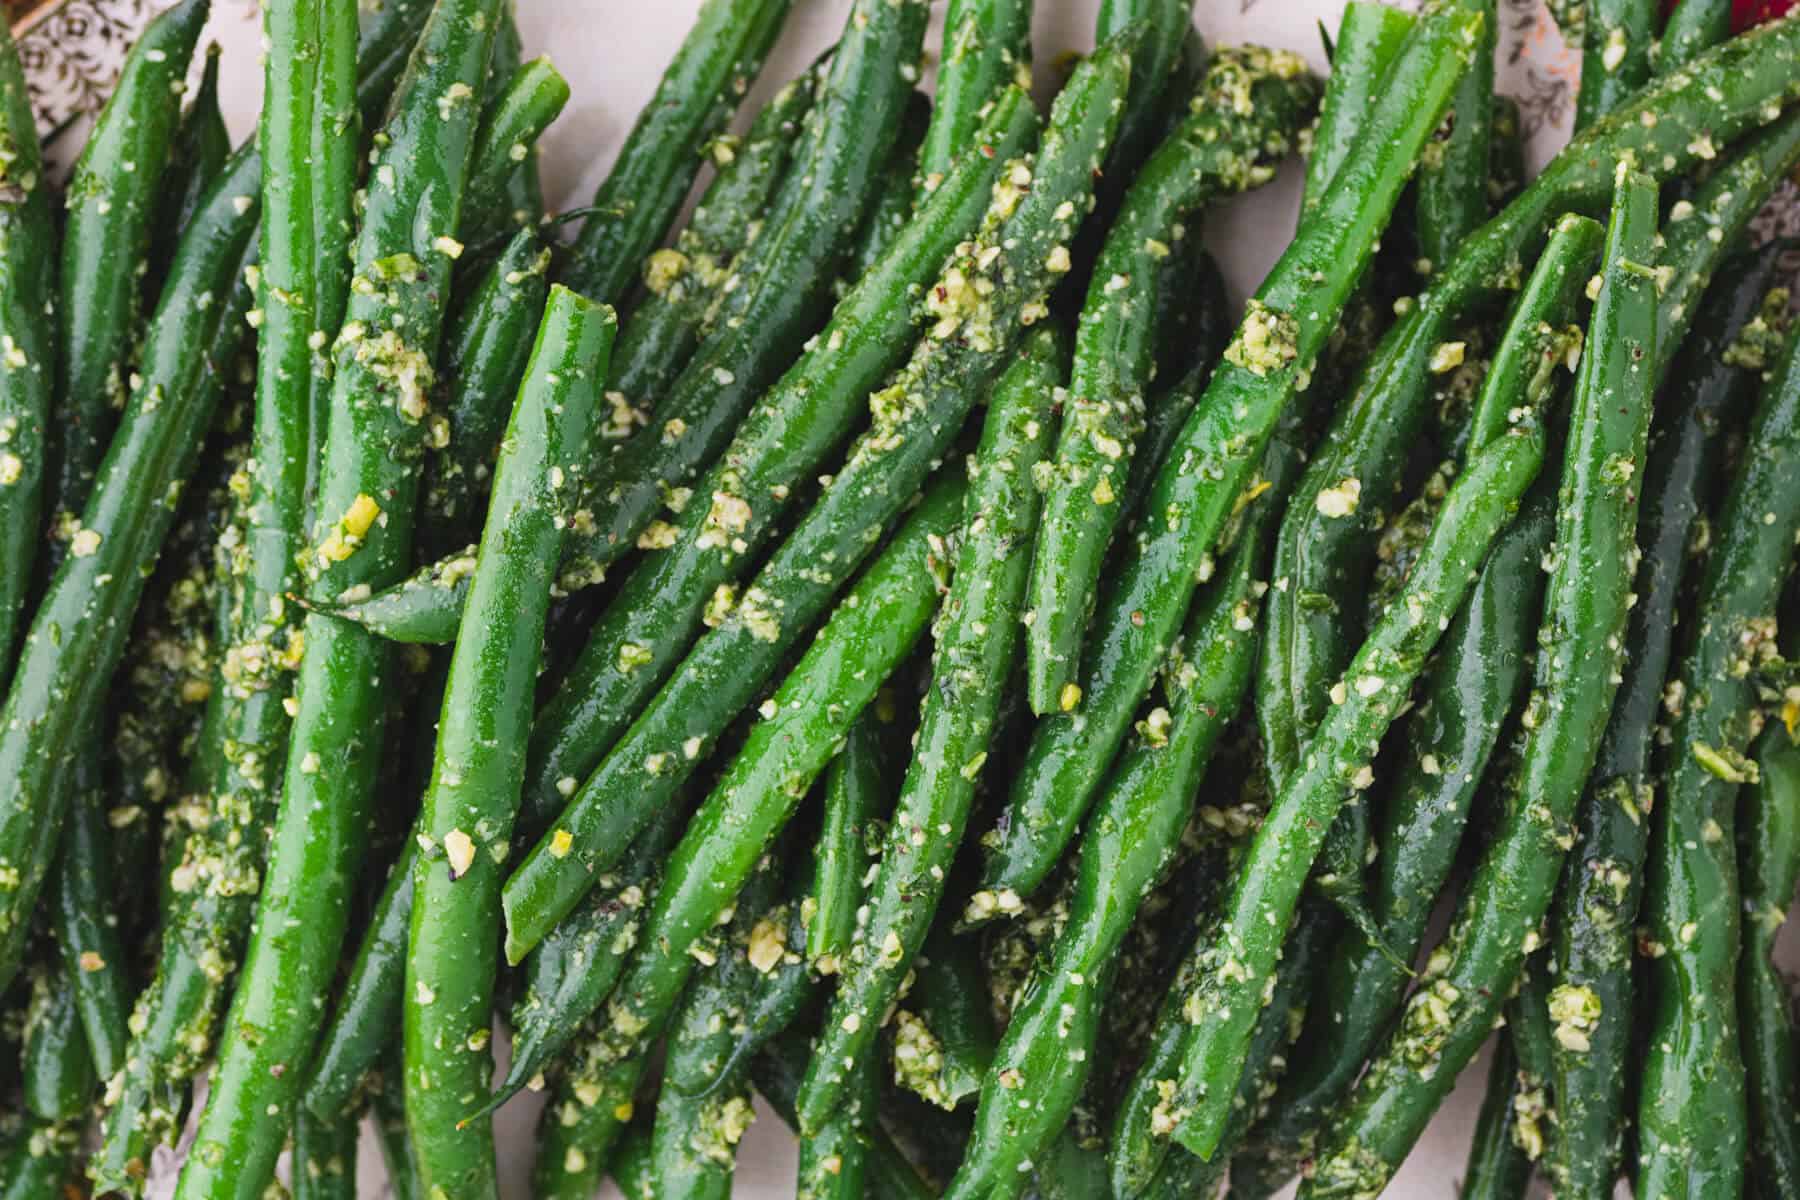 Vibrant Green Beans tossed in pesto.